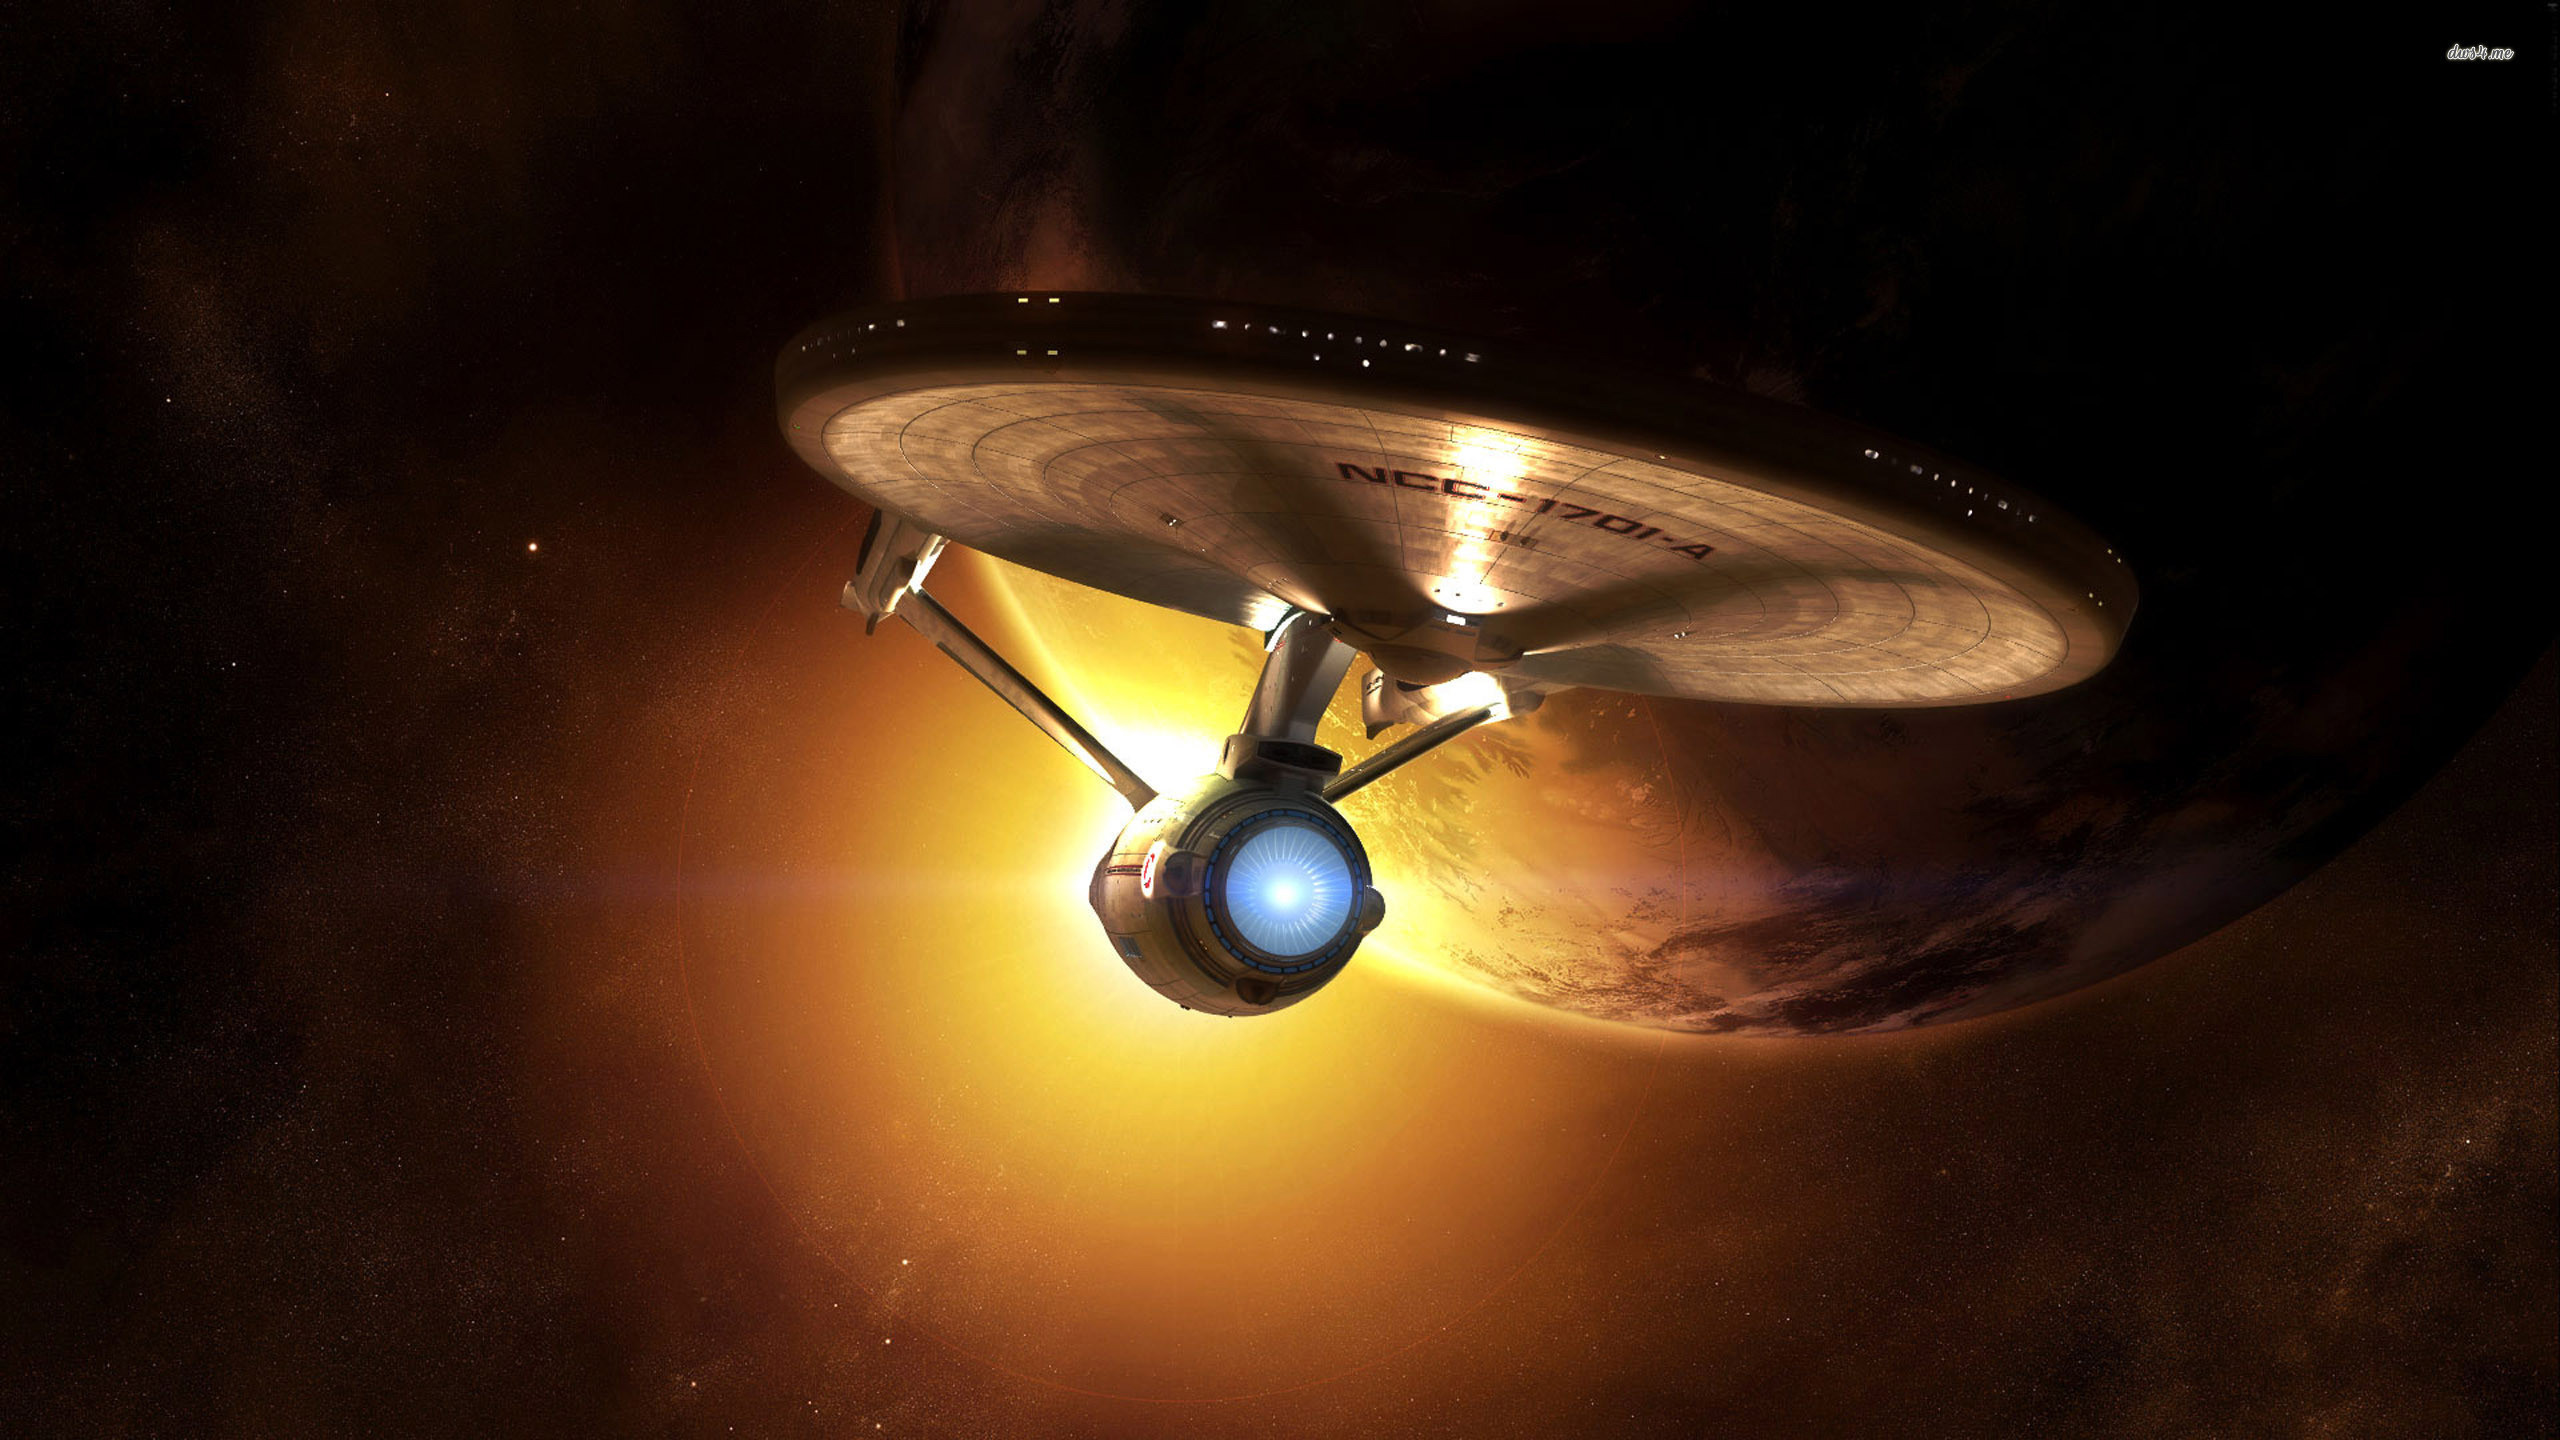 2560x1440 3840x2160 807 Star Trek Wallpapers | Star Trek Backgrounds Page 3